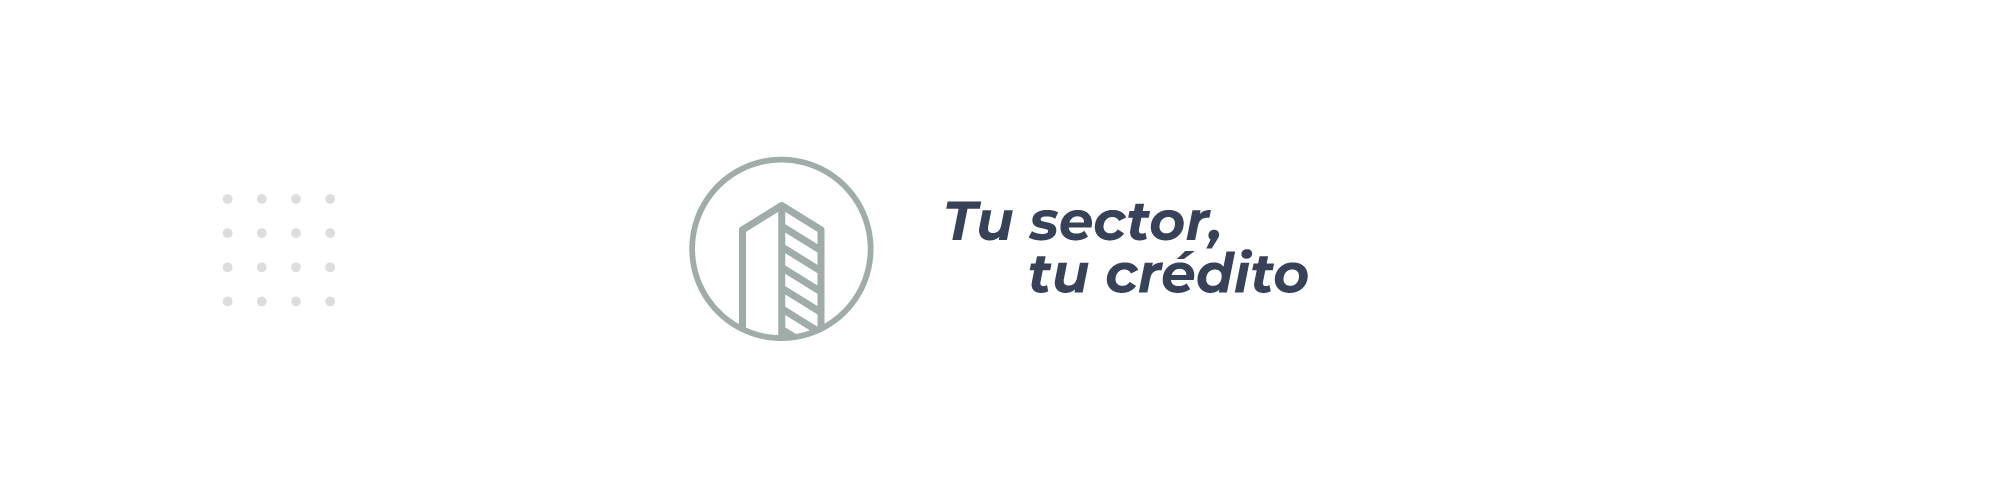 impulsar-mis-proyectos-credito-pyme-tu-sector-lease-back